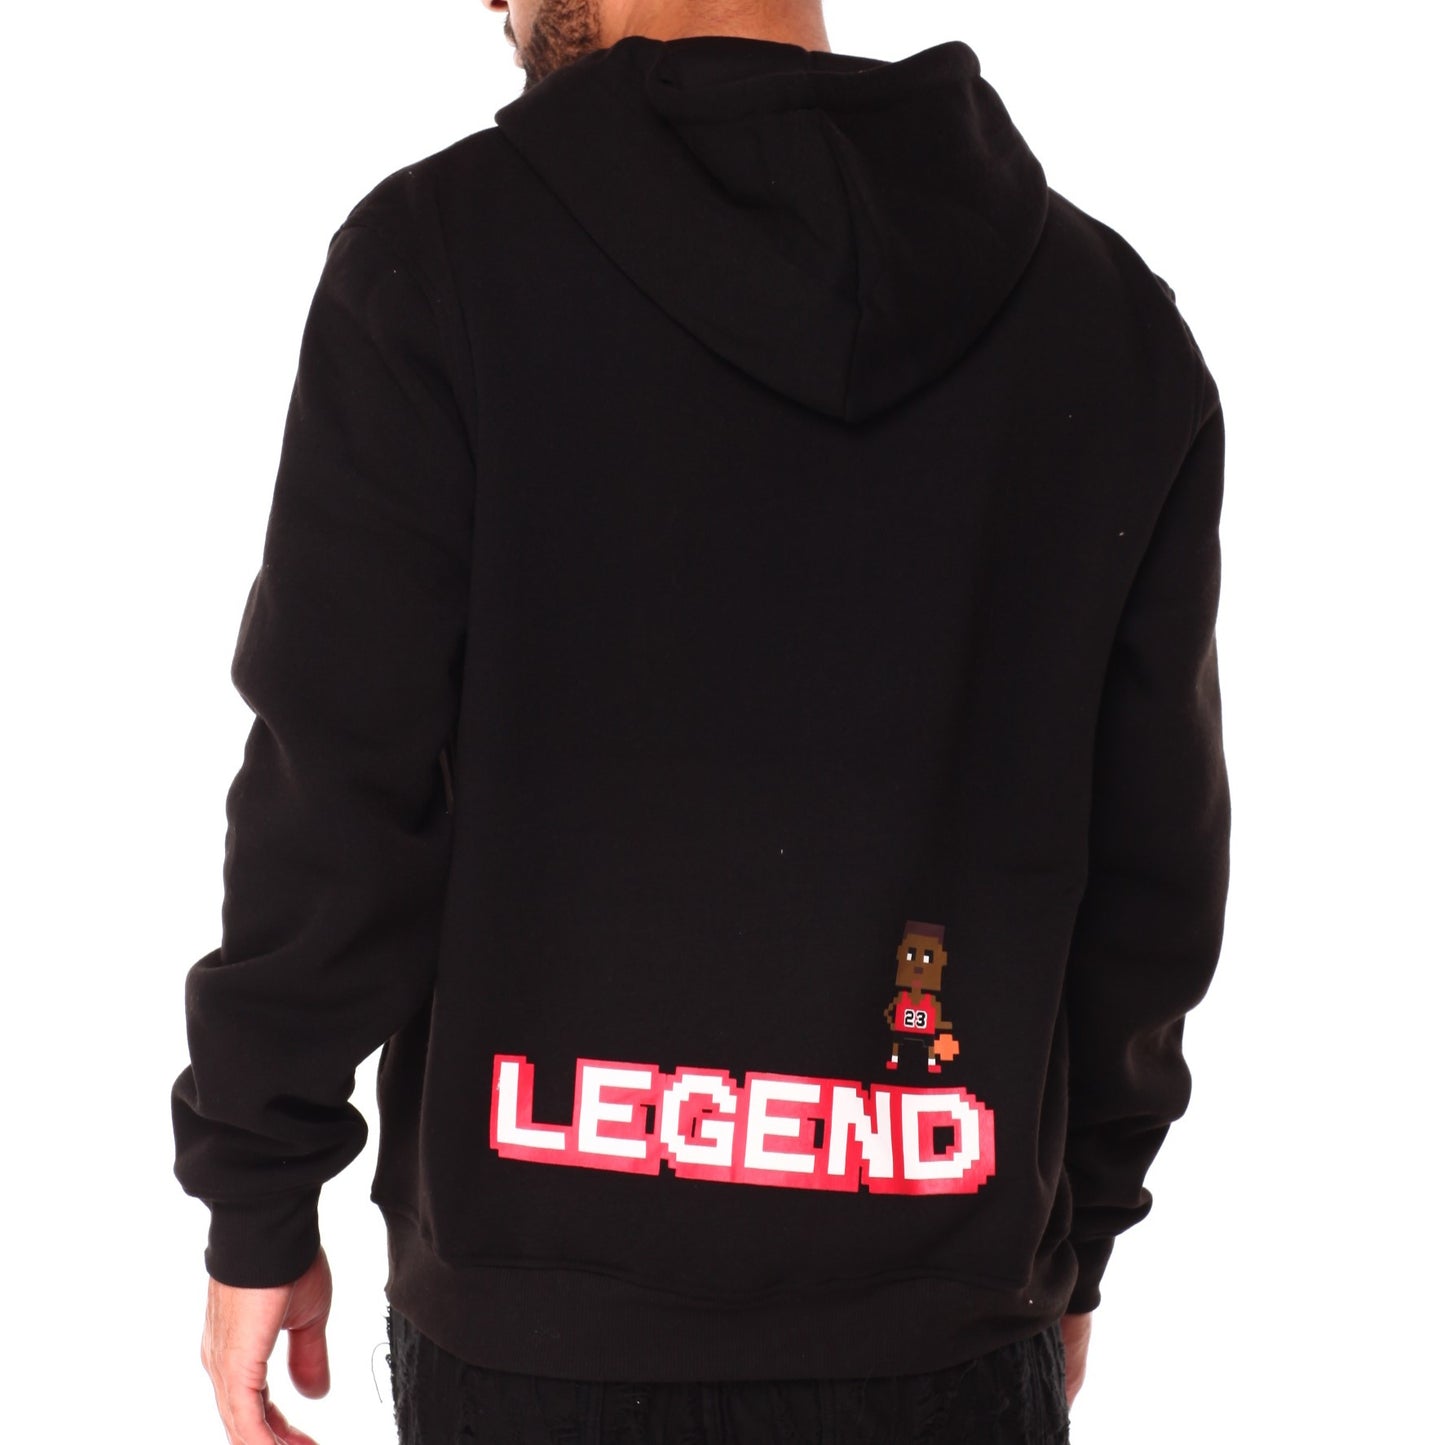 Legend Mens Graphic Pullover Hoody - Black